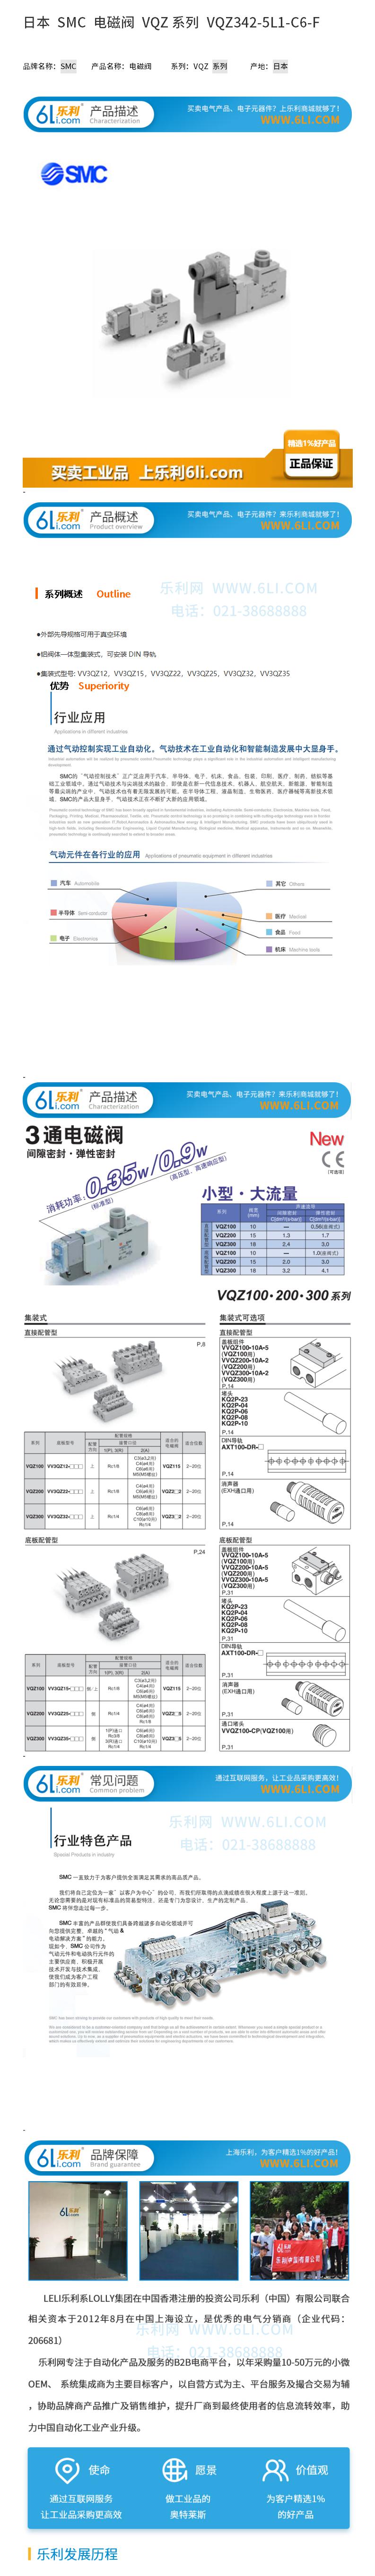 SMC 电磁阀 VQZ100 200 300 系列 整理资料（己）1.jpg